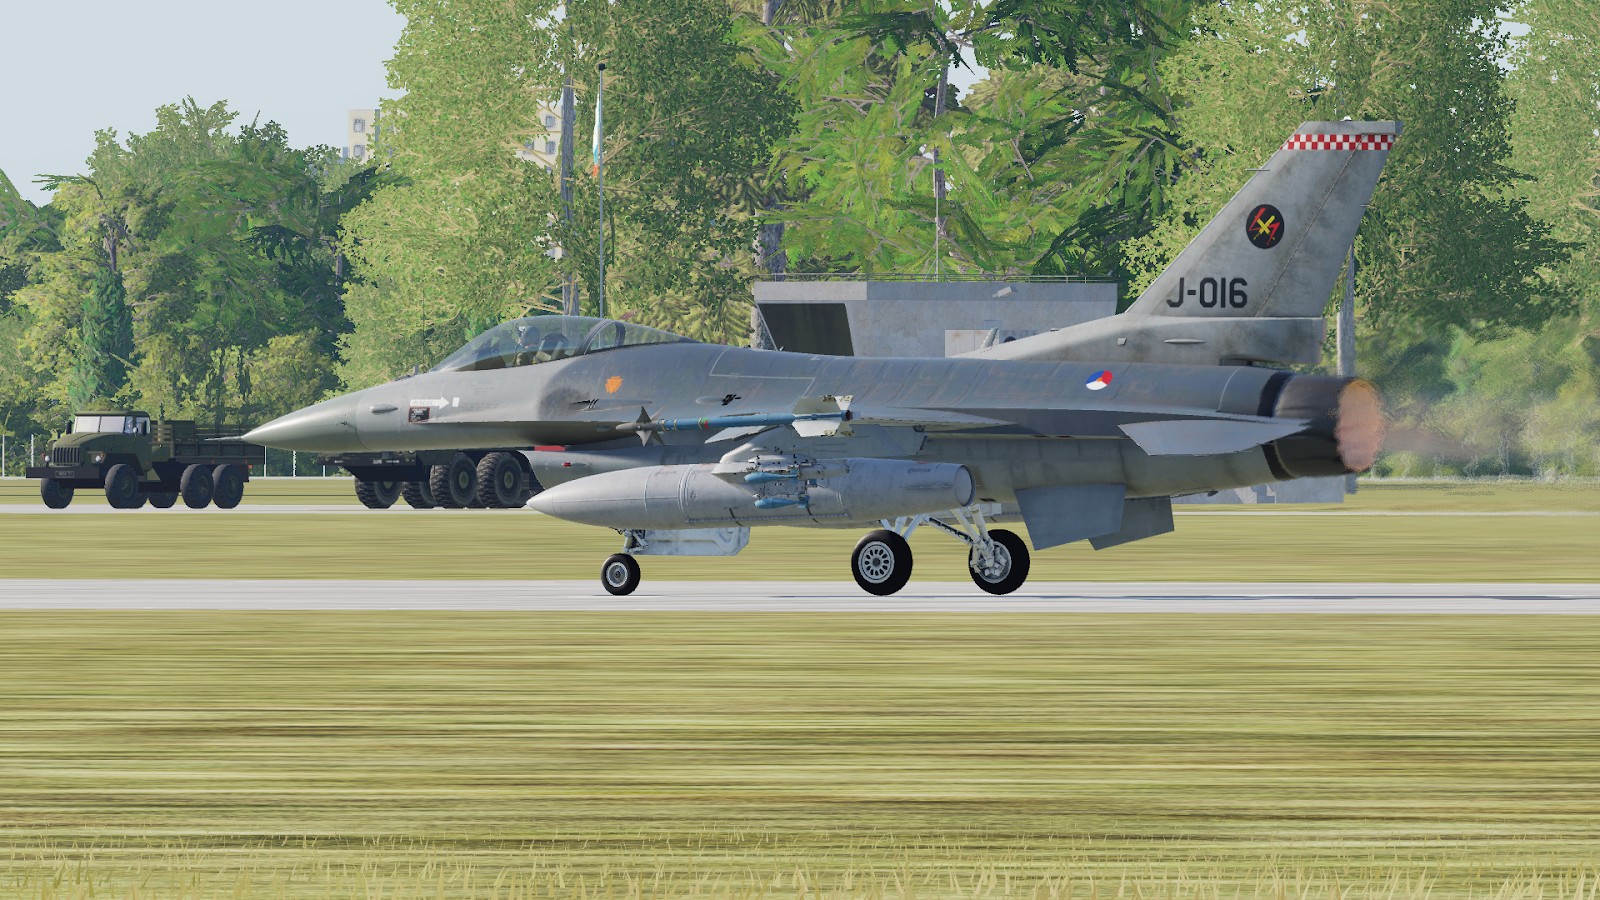 RNLAF F-16 J-016 Skin